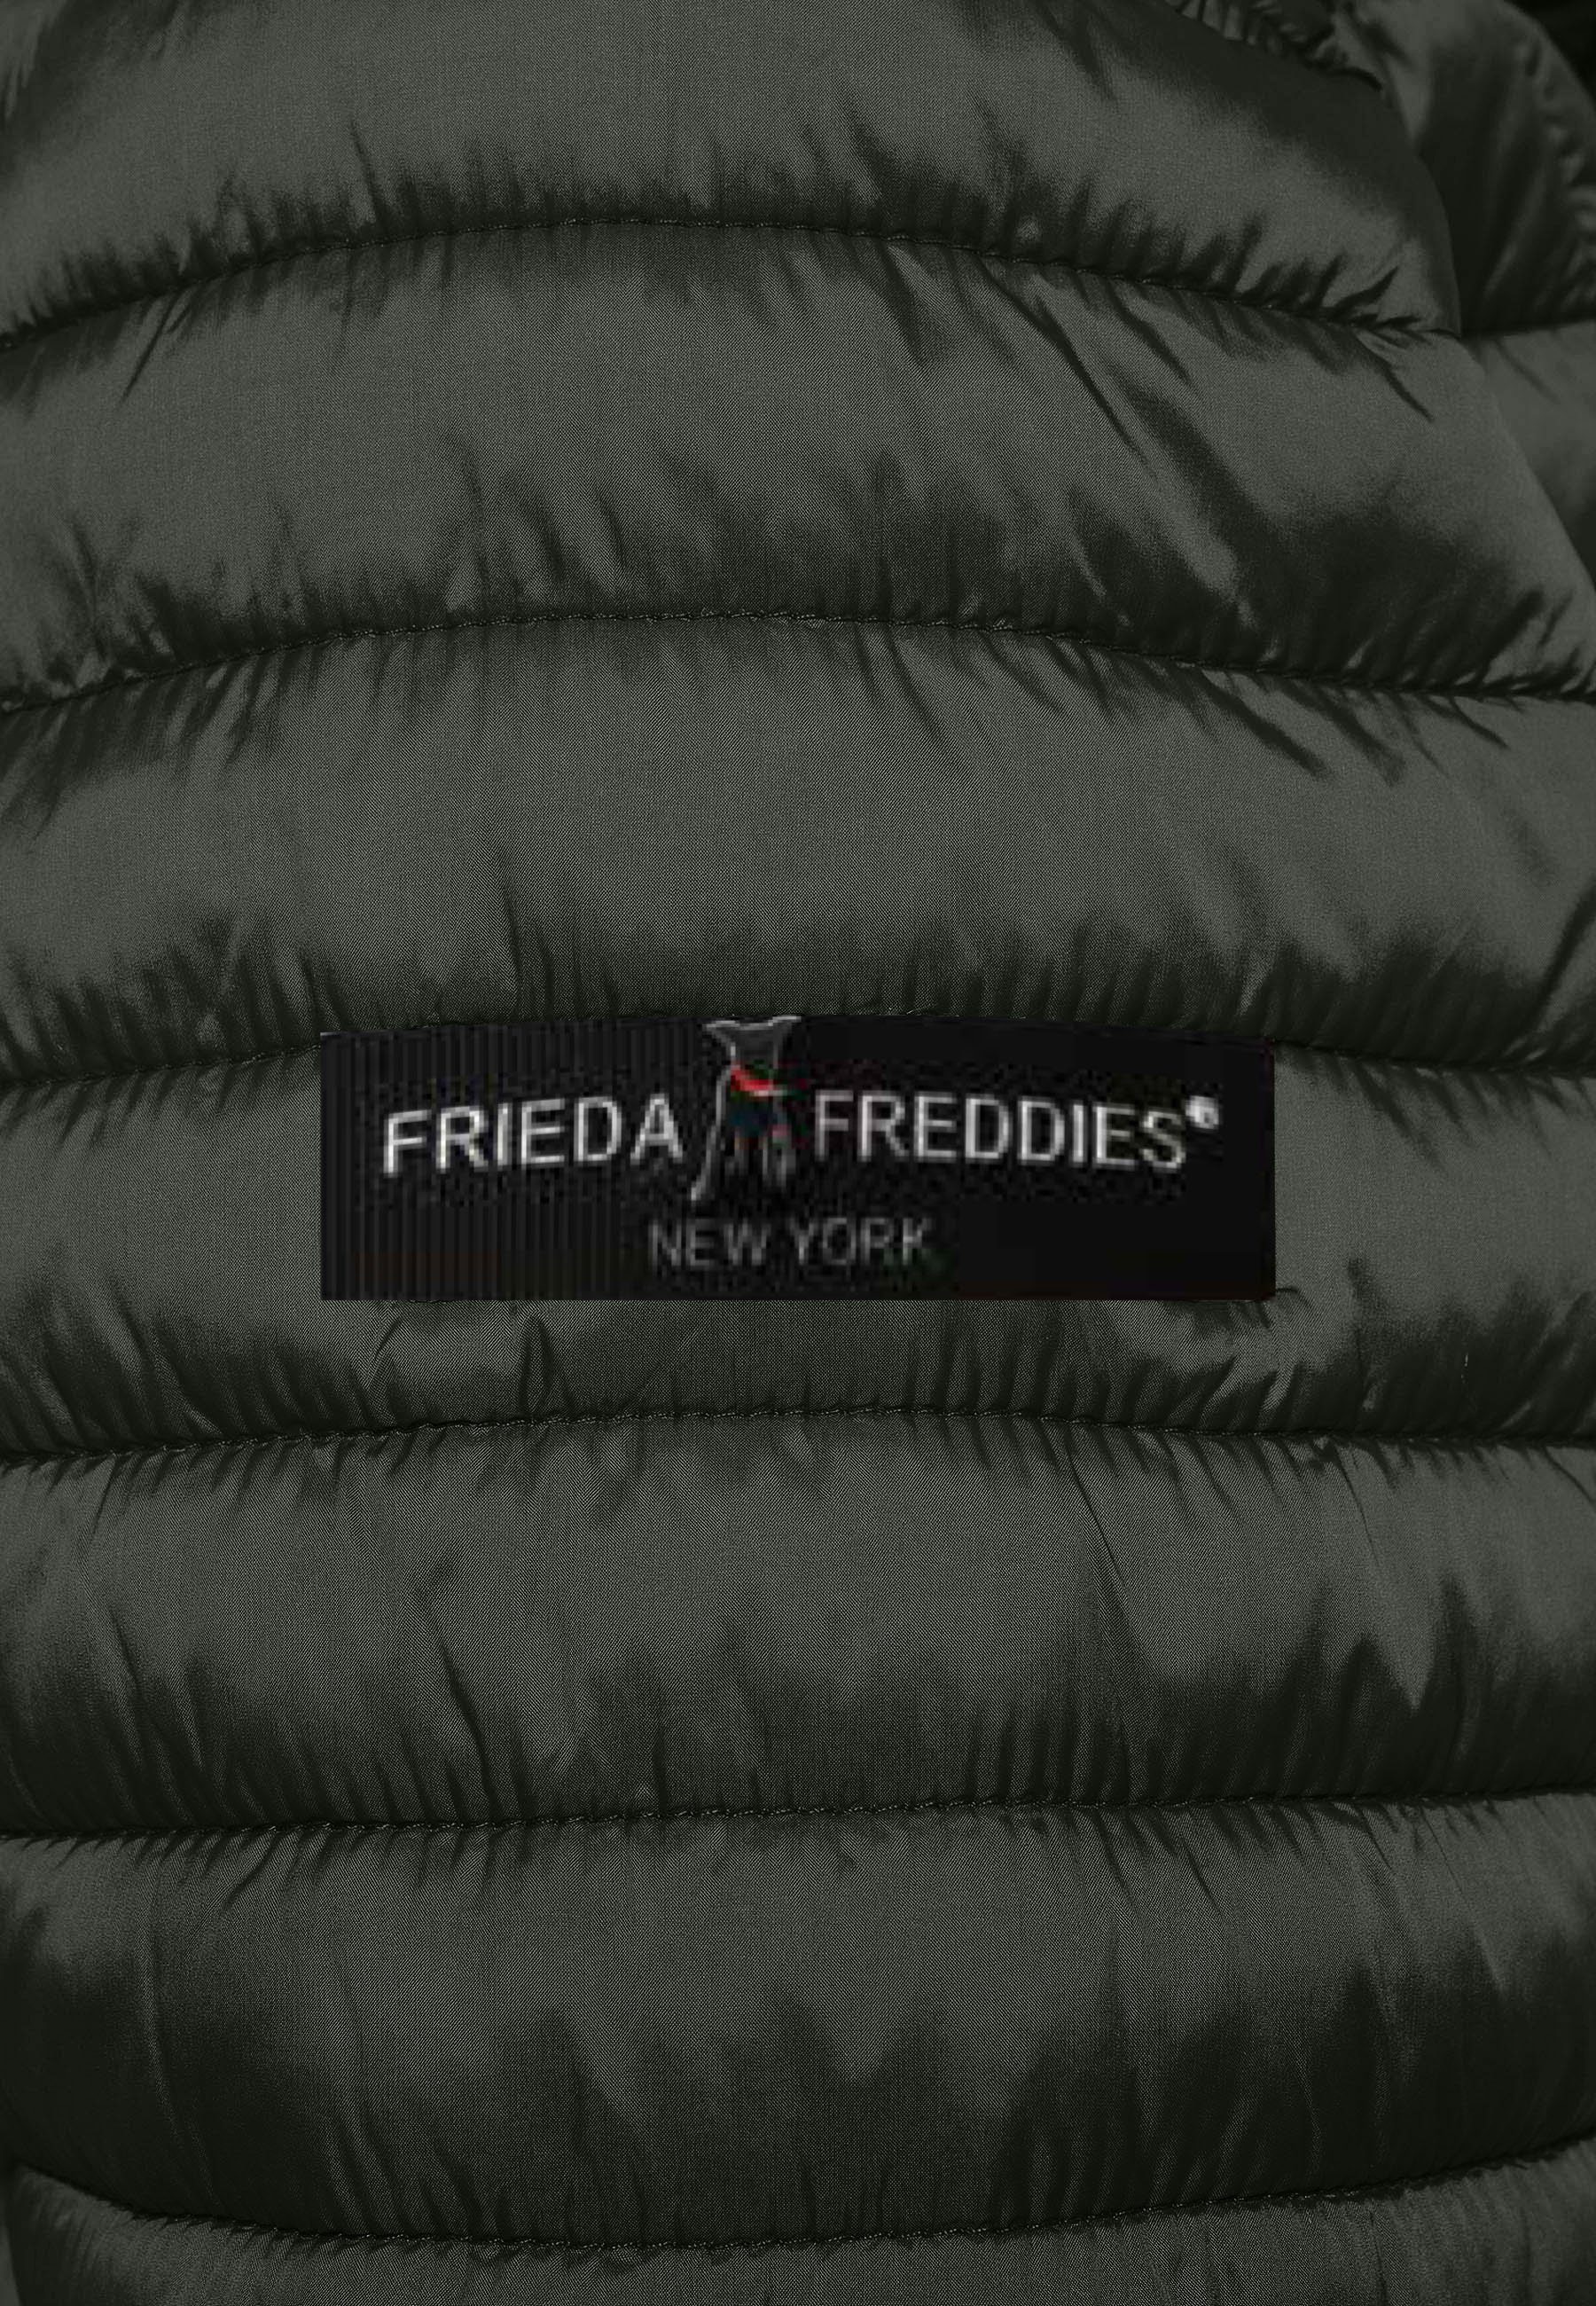 Fake Down Winterjacke Frieda NY Jacket, Friday Freddies & olive